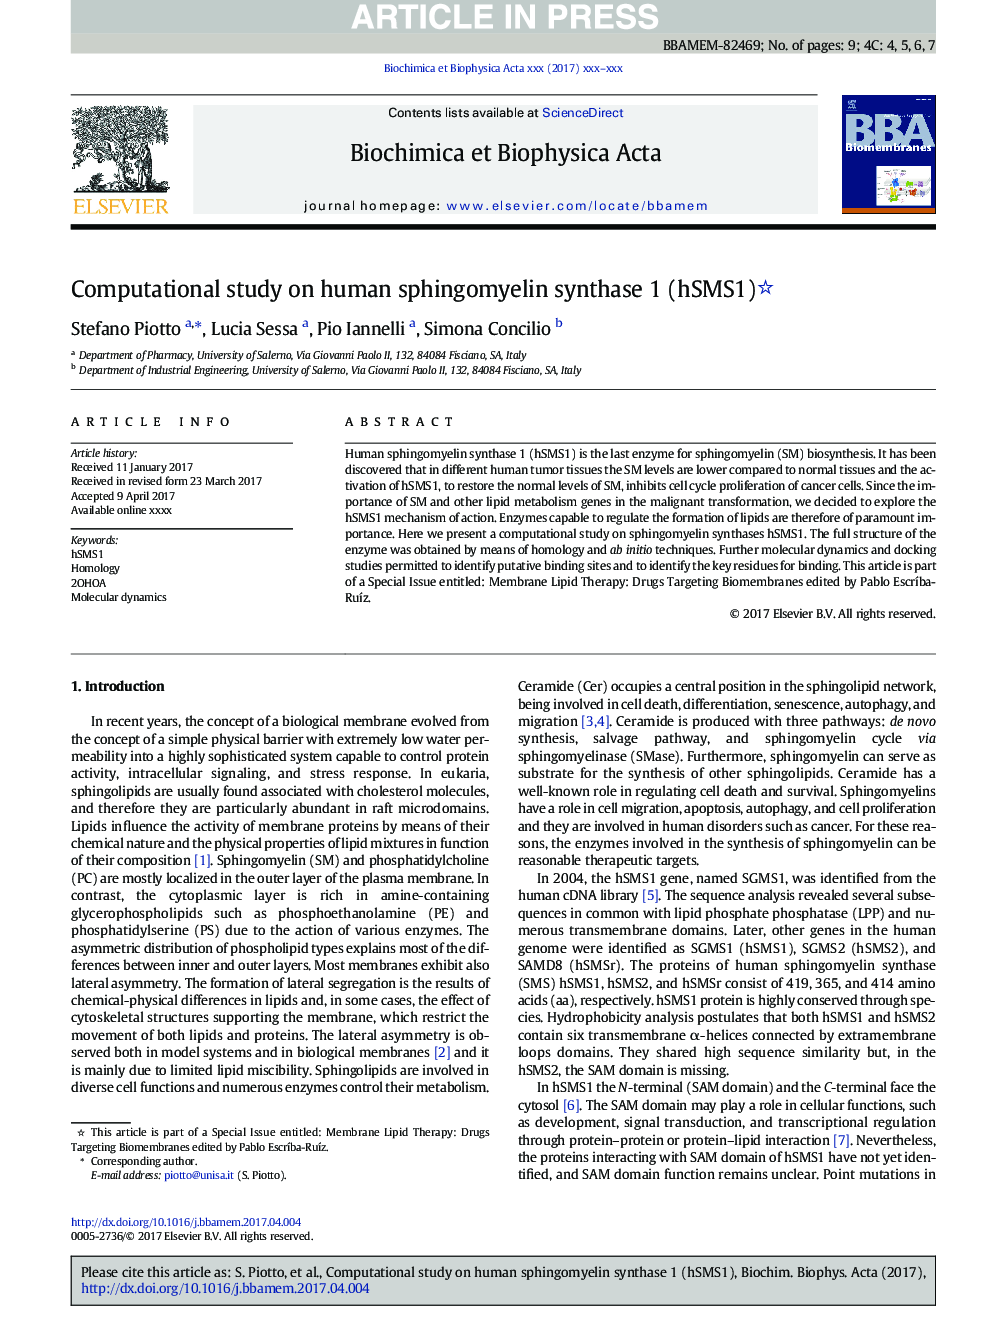 Computational study on human sphingomyelin synthase 1 (hSMS1)